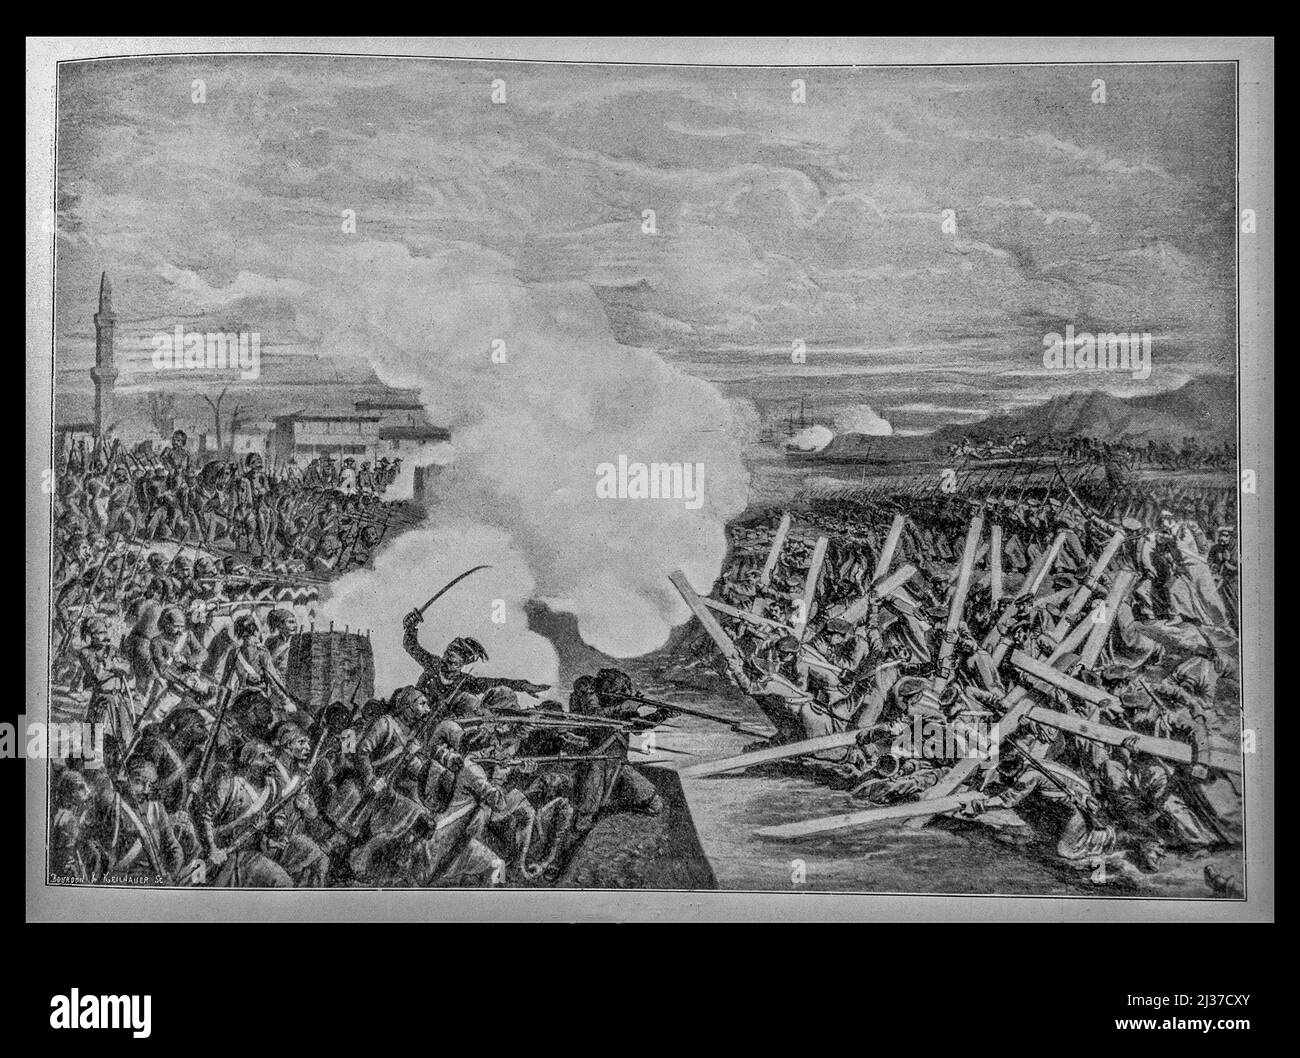 Guerra de Crimea - La batalla de Eupatoria ((Tormenta de Eupatoria), turco: Gözleve Muharesbesi) fue el compromiso militar más importante de la Crimea Foto de stock